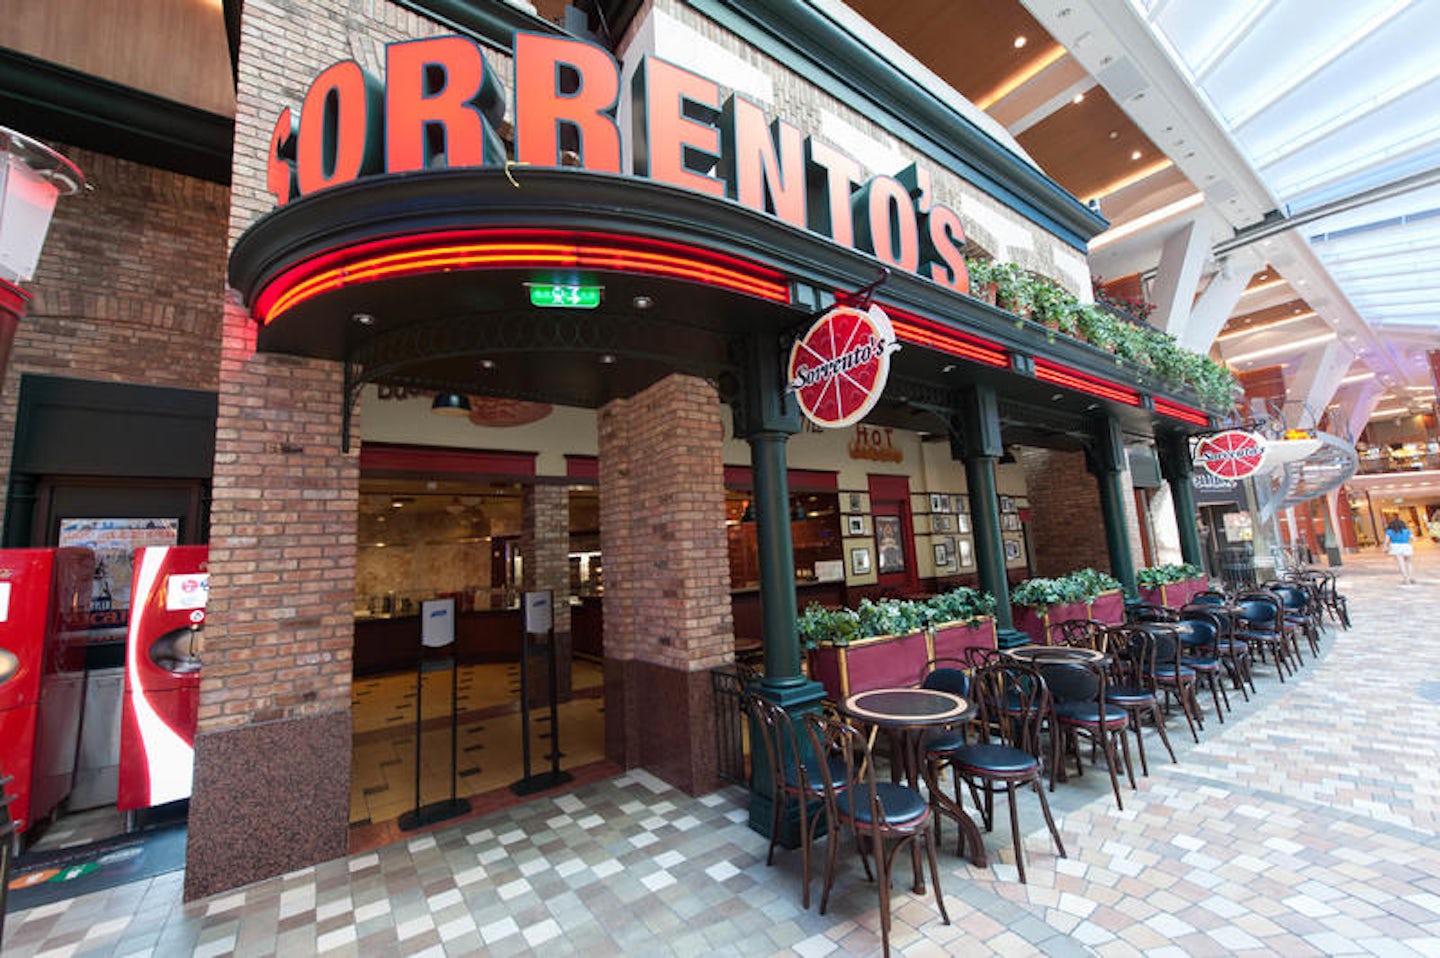 Sorrento's Pizzeria on Allure of the Seas